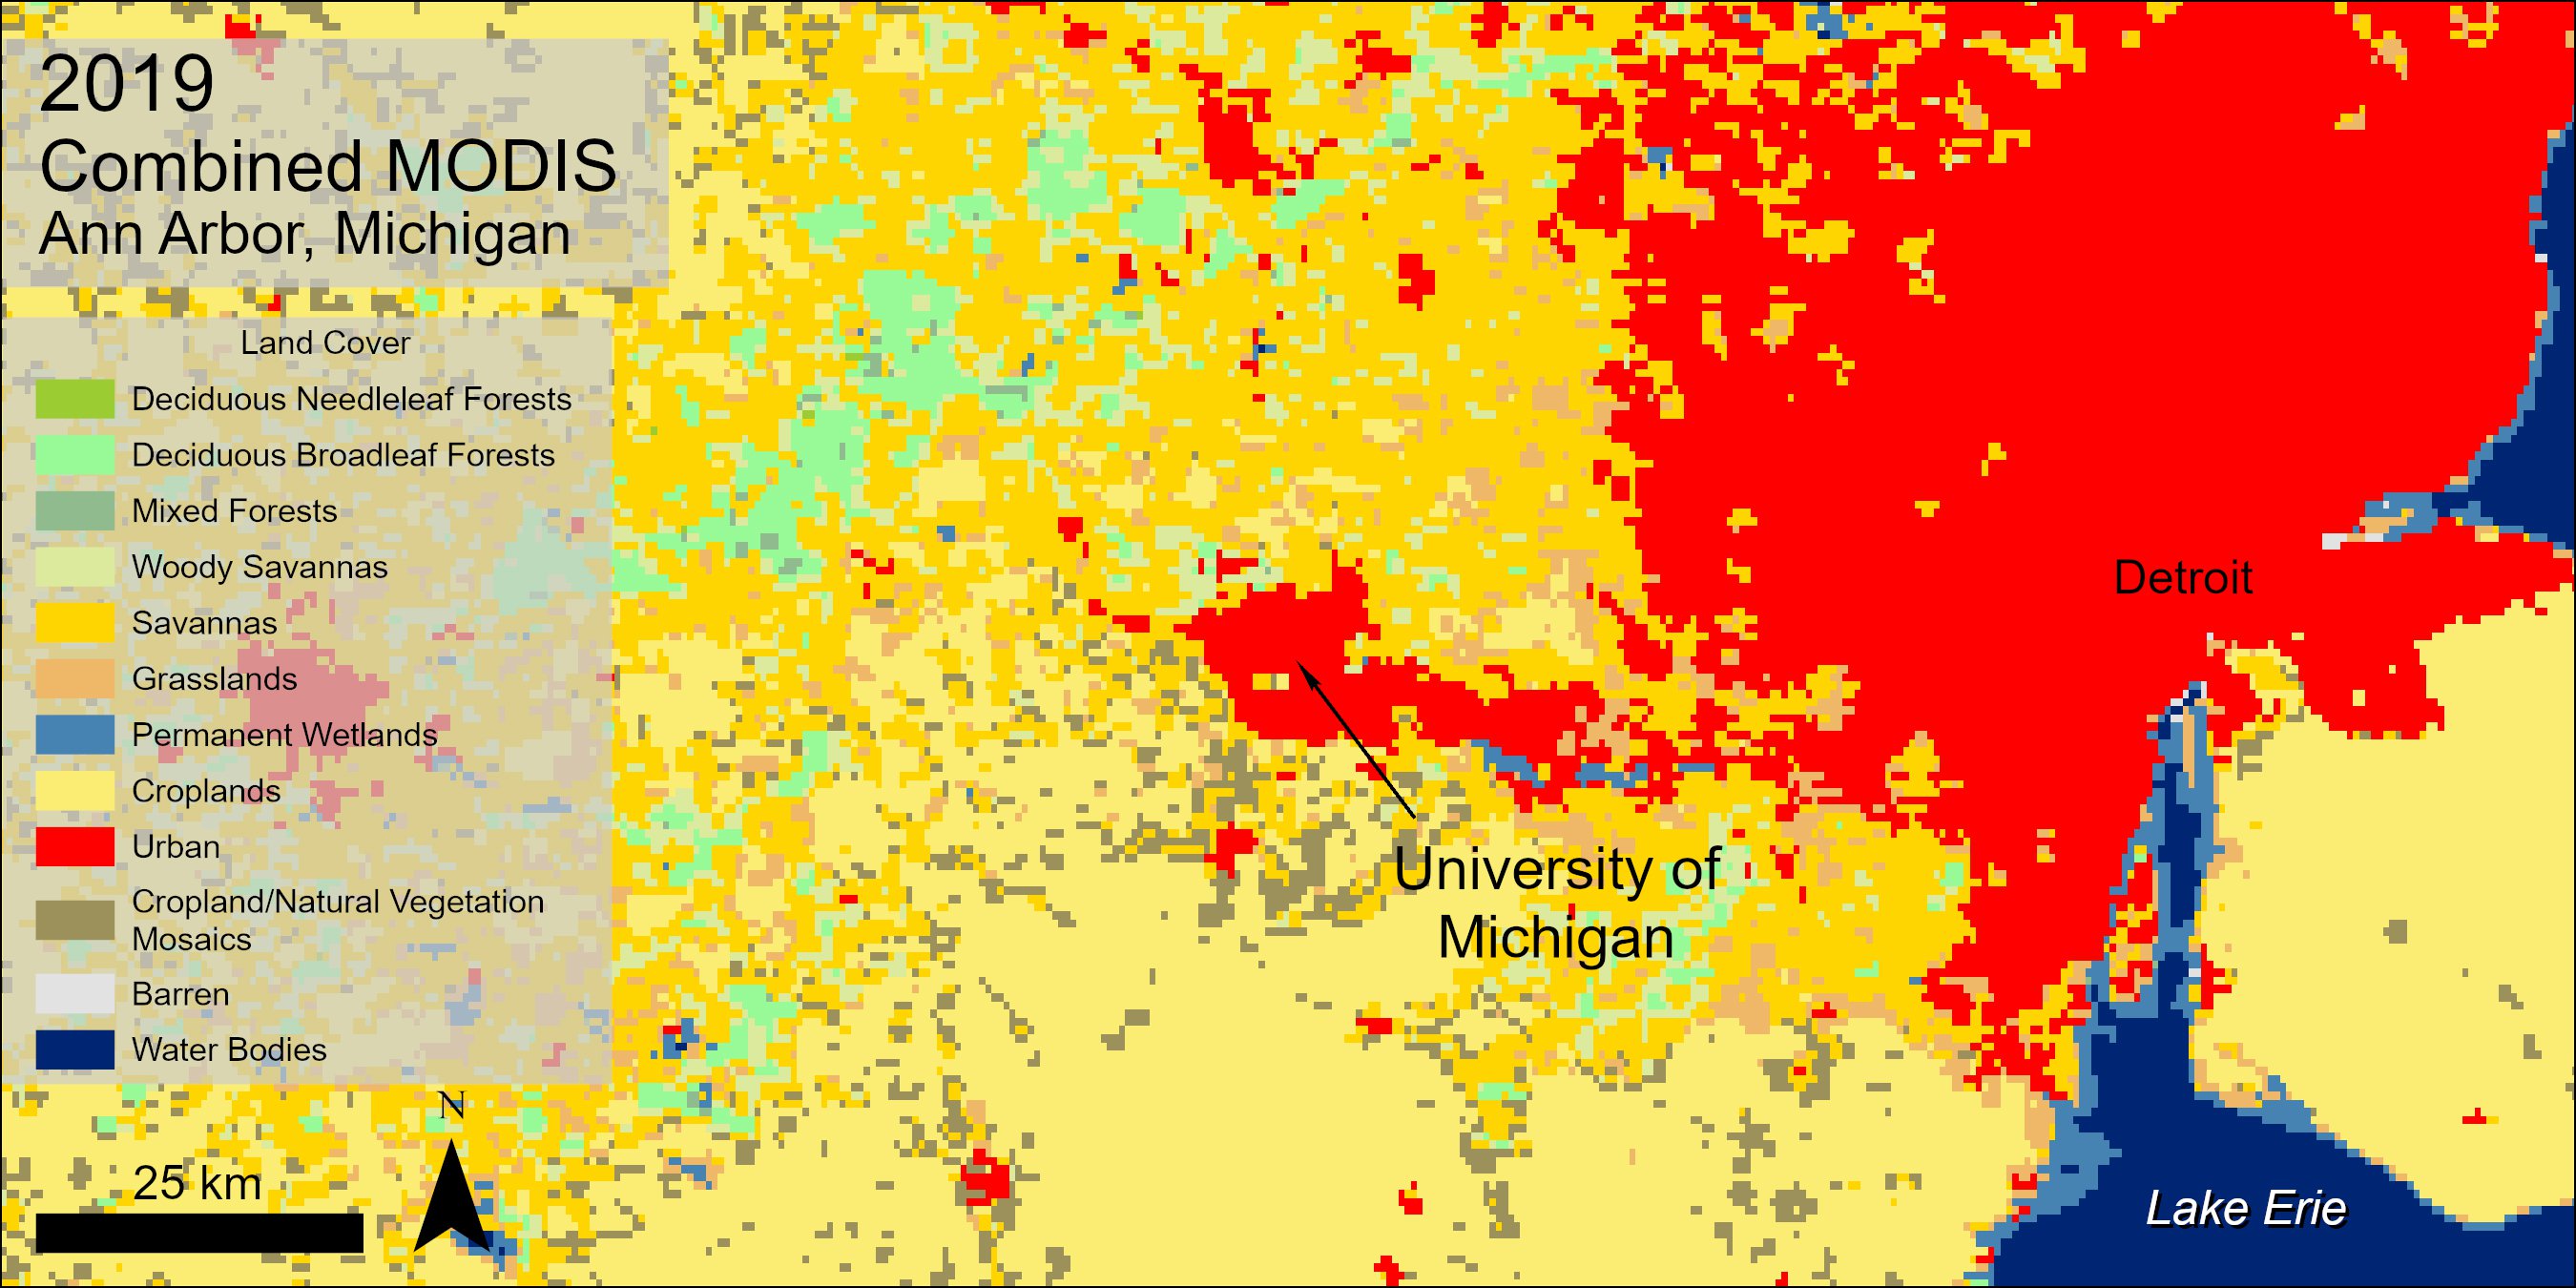 Combined MODIS land cover over Ann Arbor, Michigan.